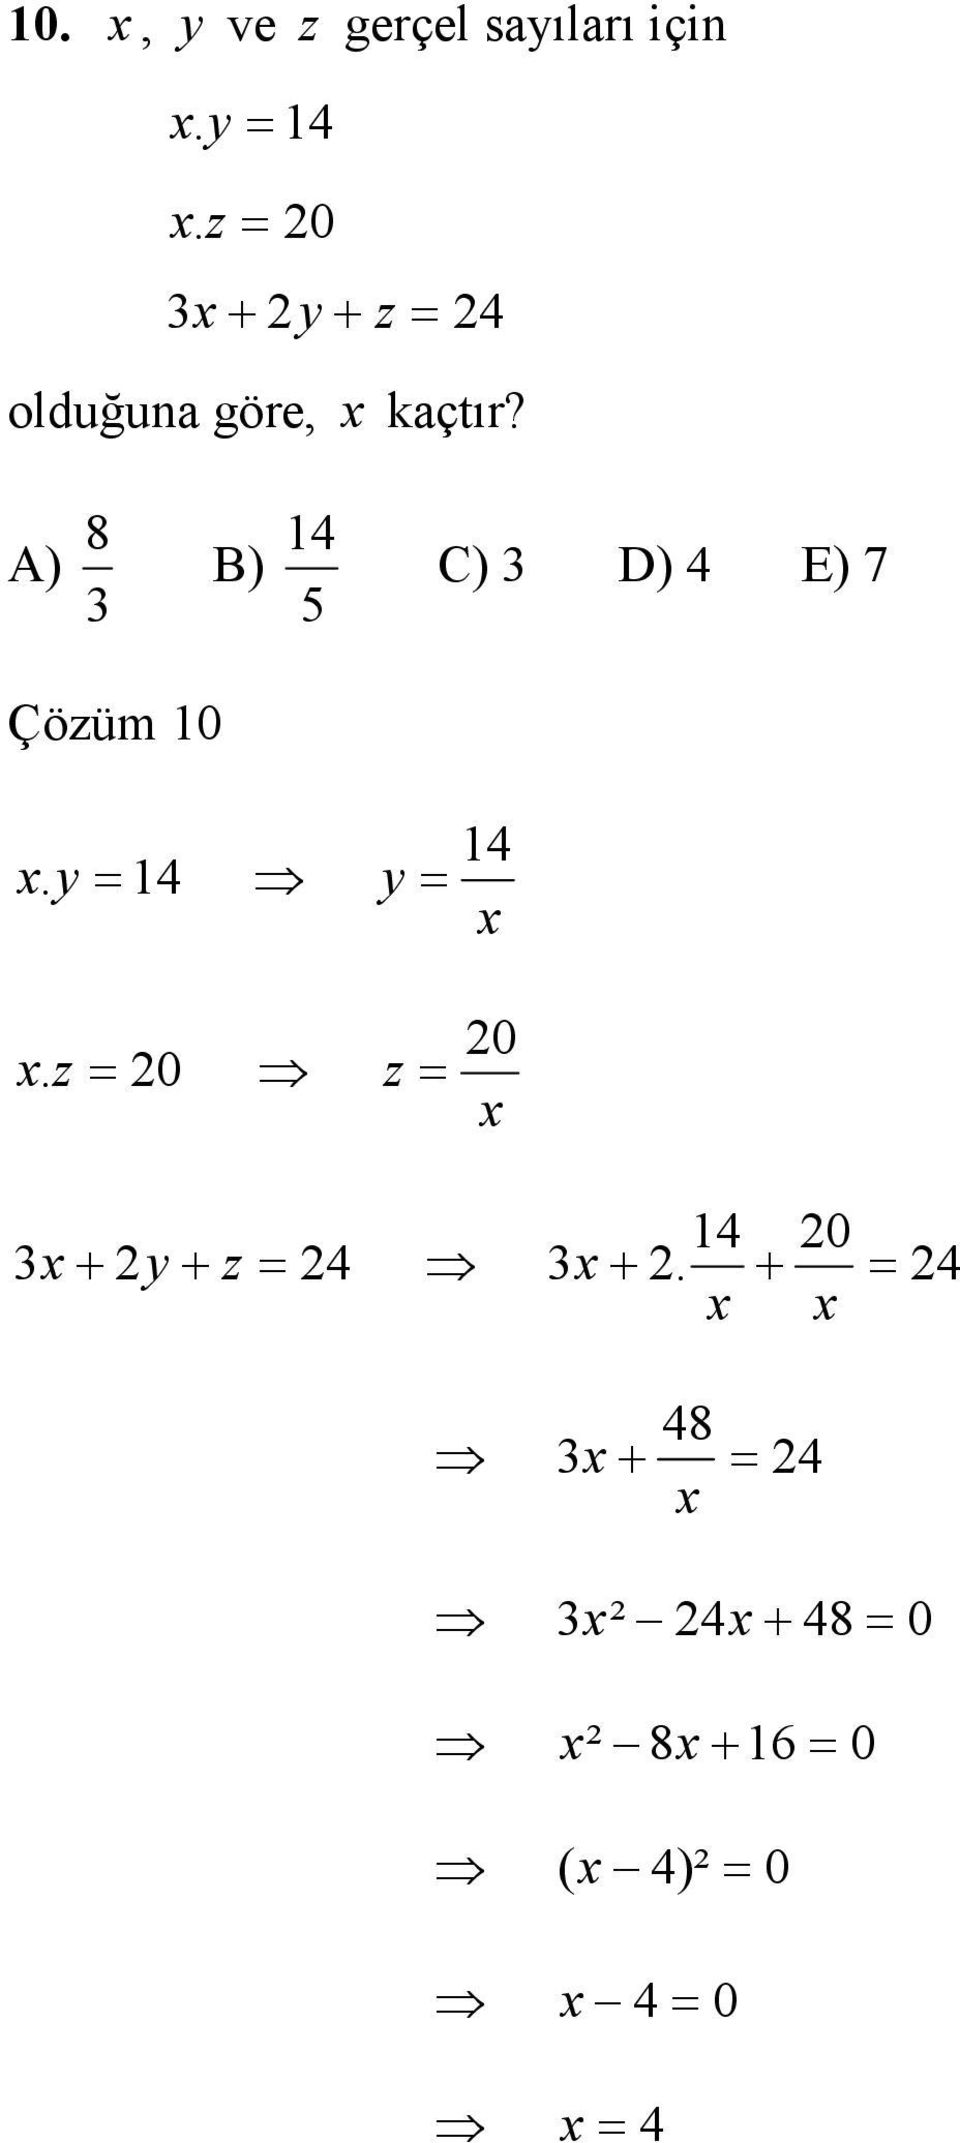 A) 8 4 B) 5 C) D) 4 E) 7 Çözüm 0. y 4 4 y.